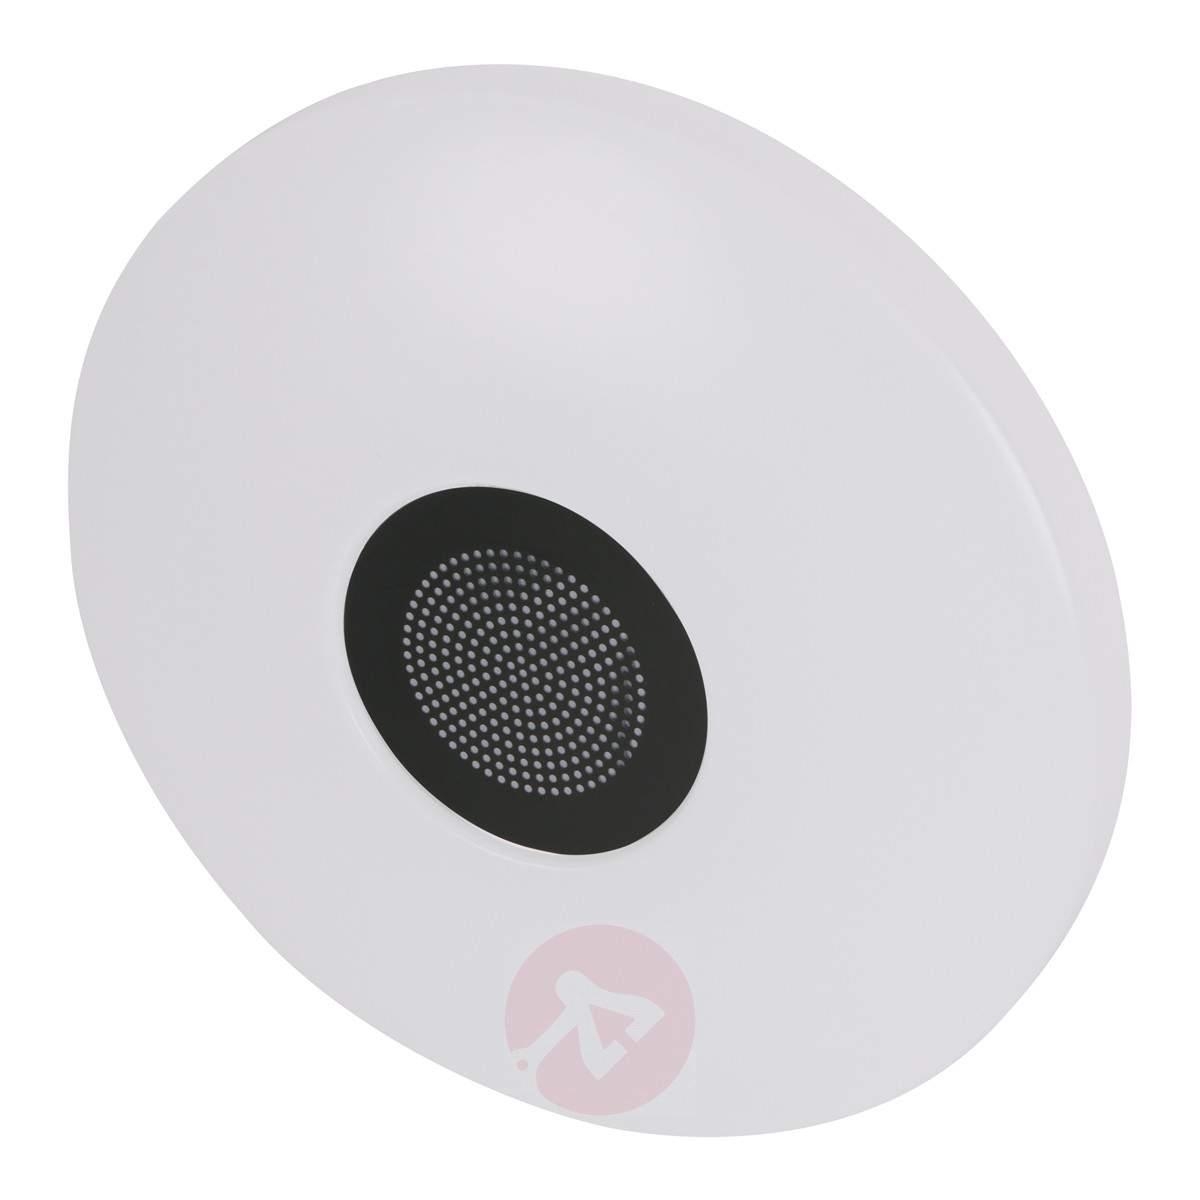 Permalink to Bluetooth Ceiling Light Speakers